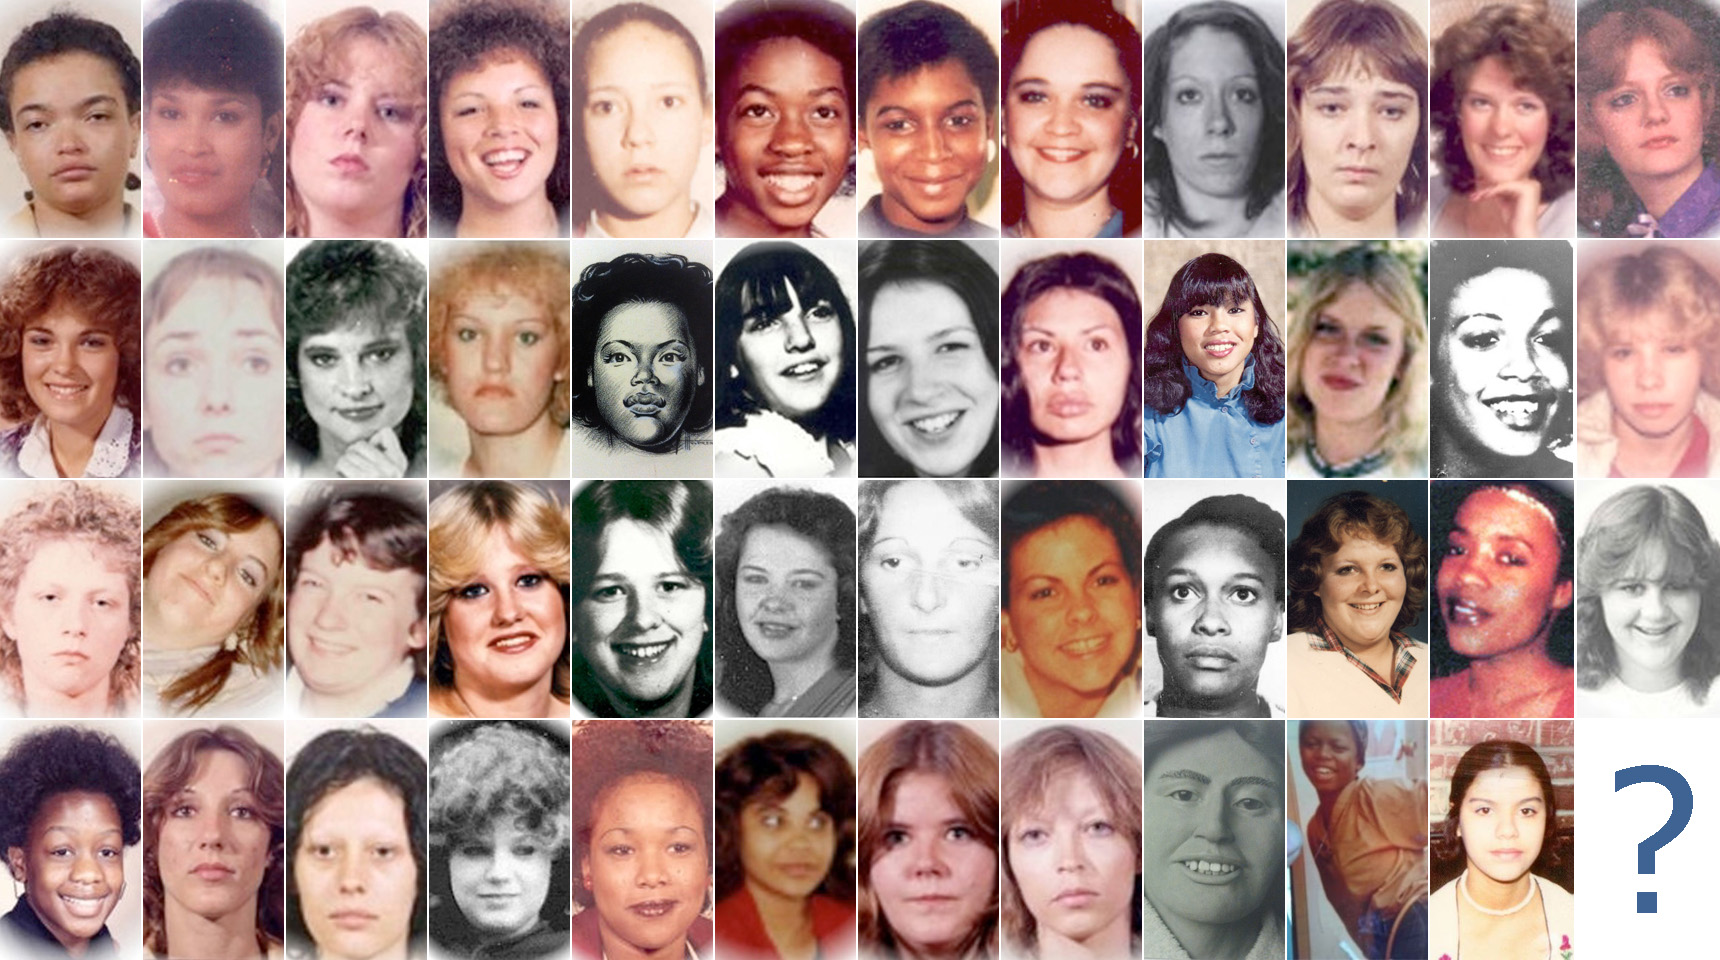 Green River Killer Gary Ridgway's victims in photos.